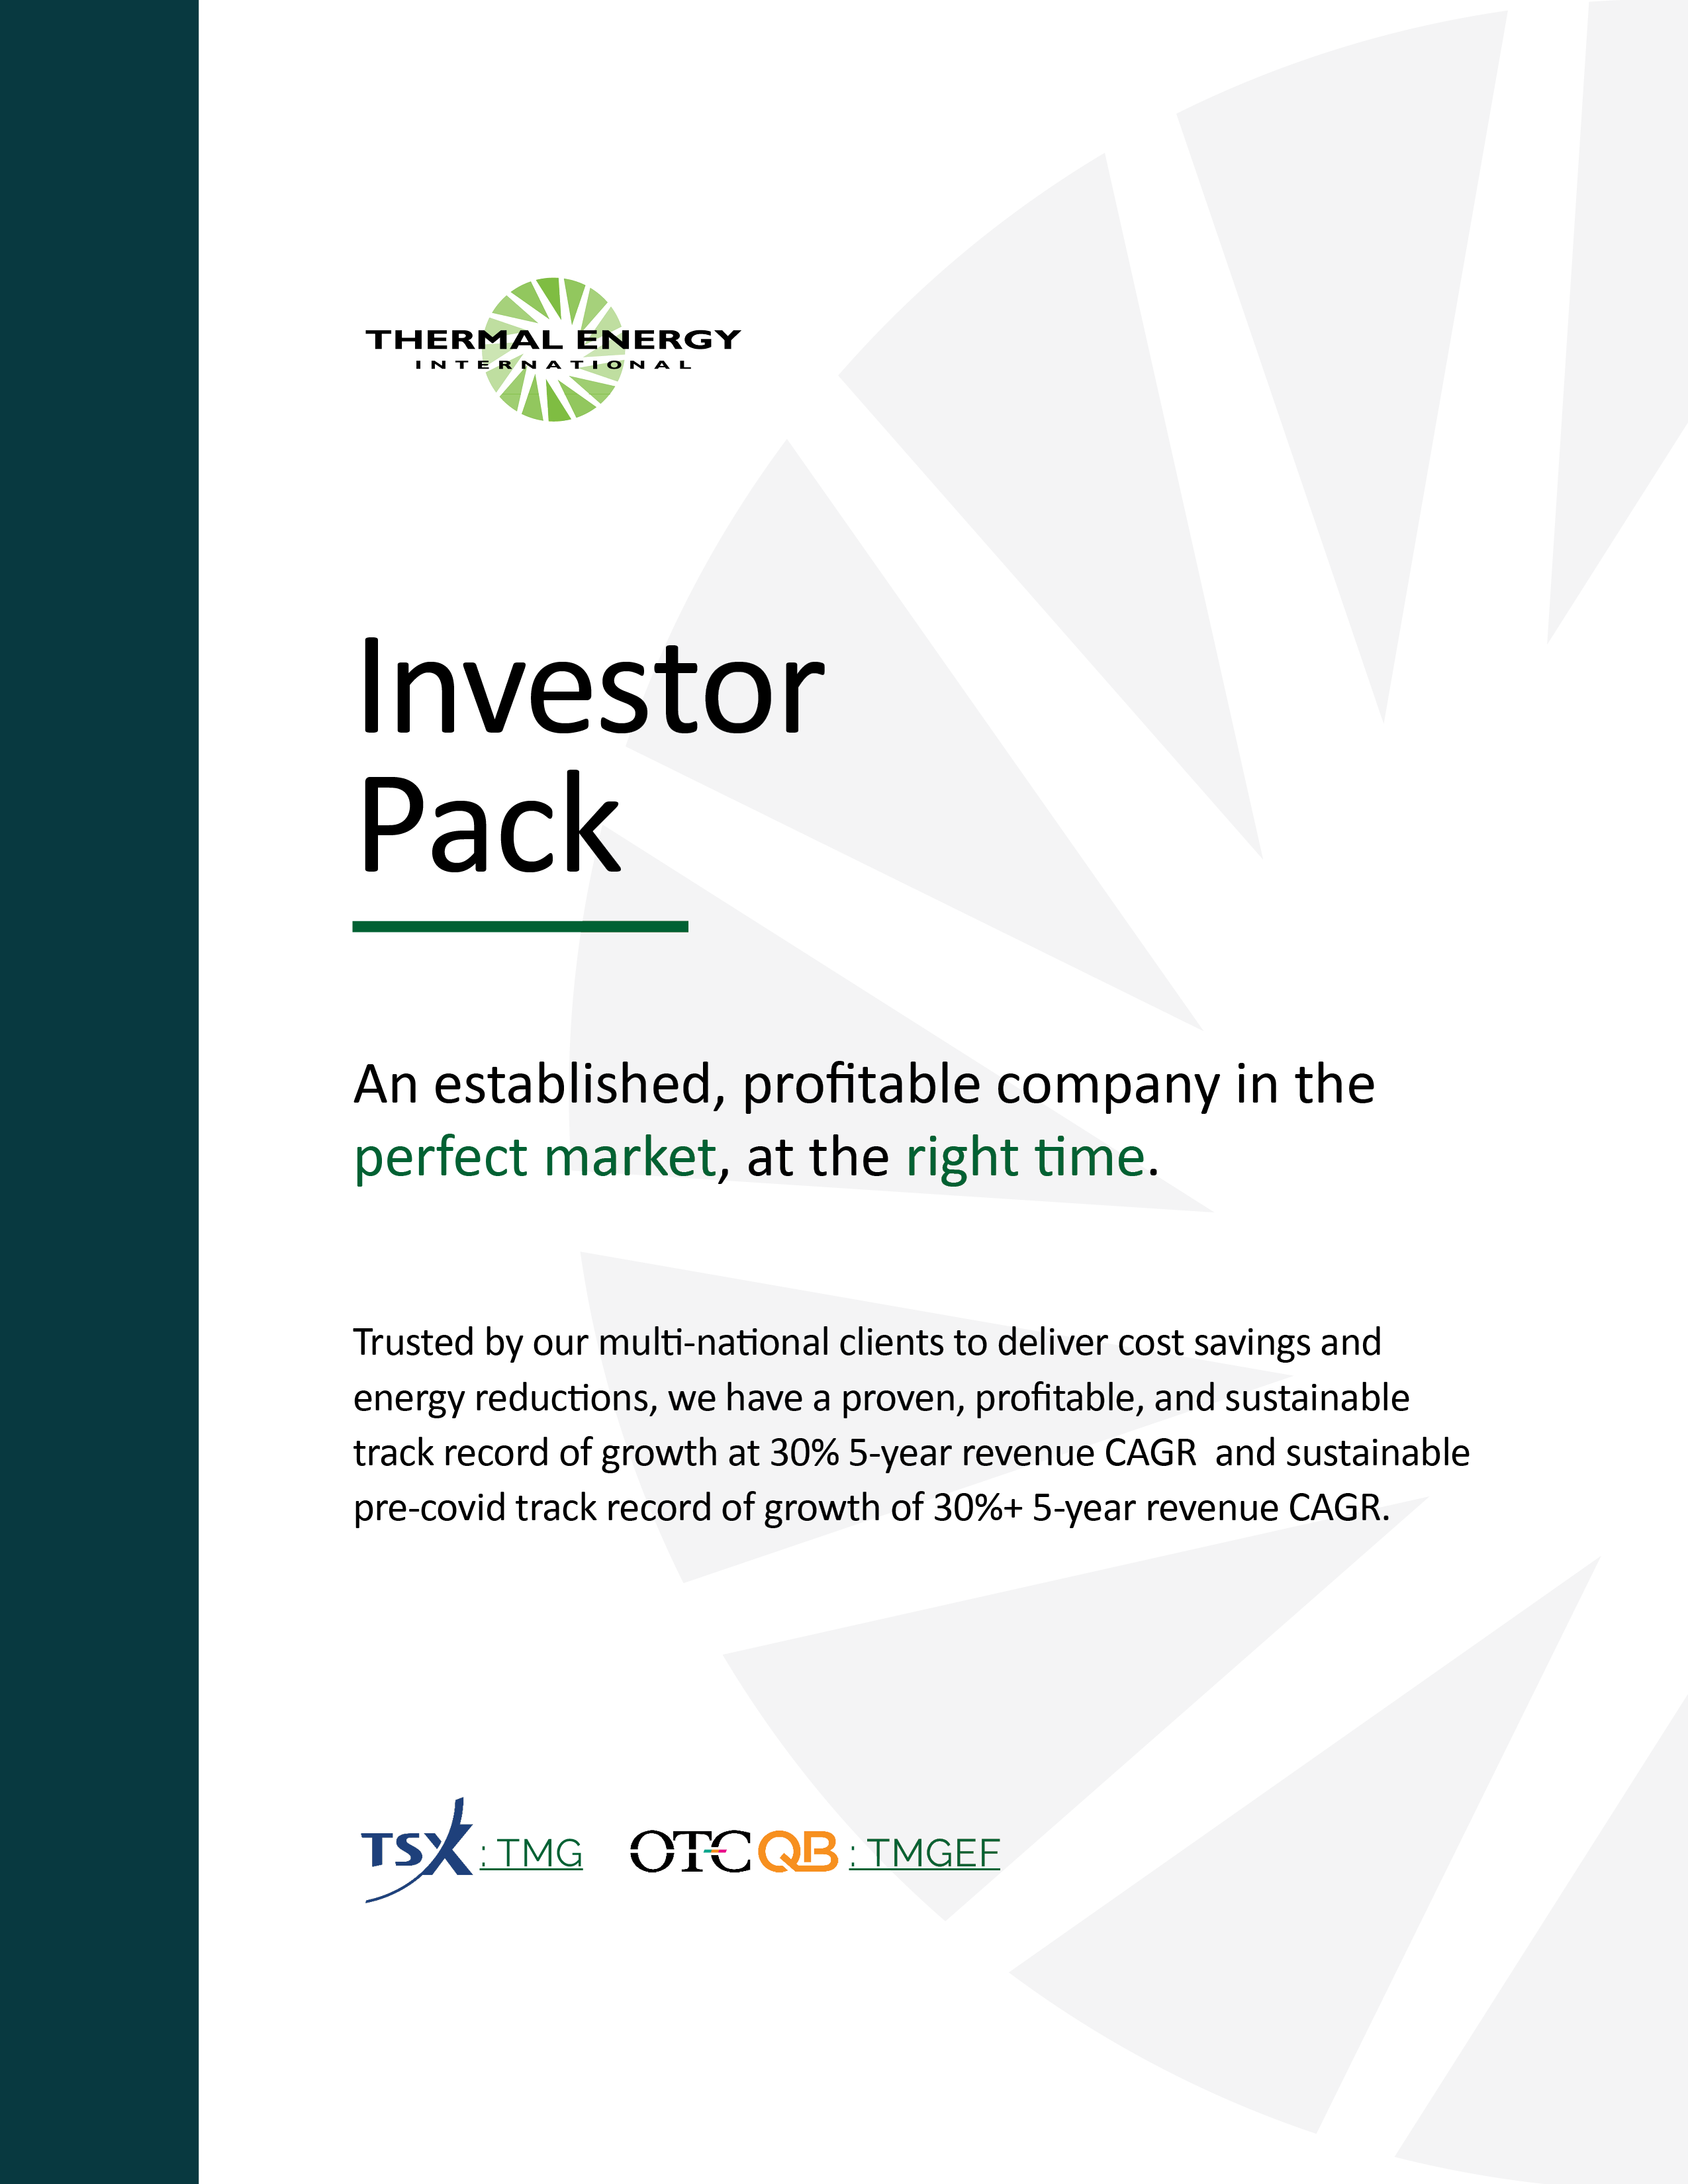 Thermal Energy International Investor Pack